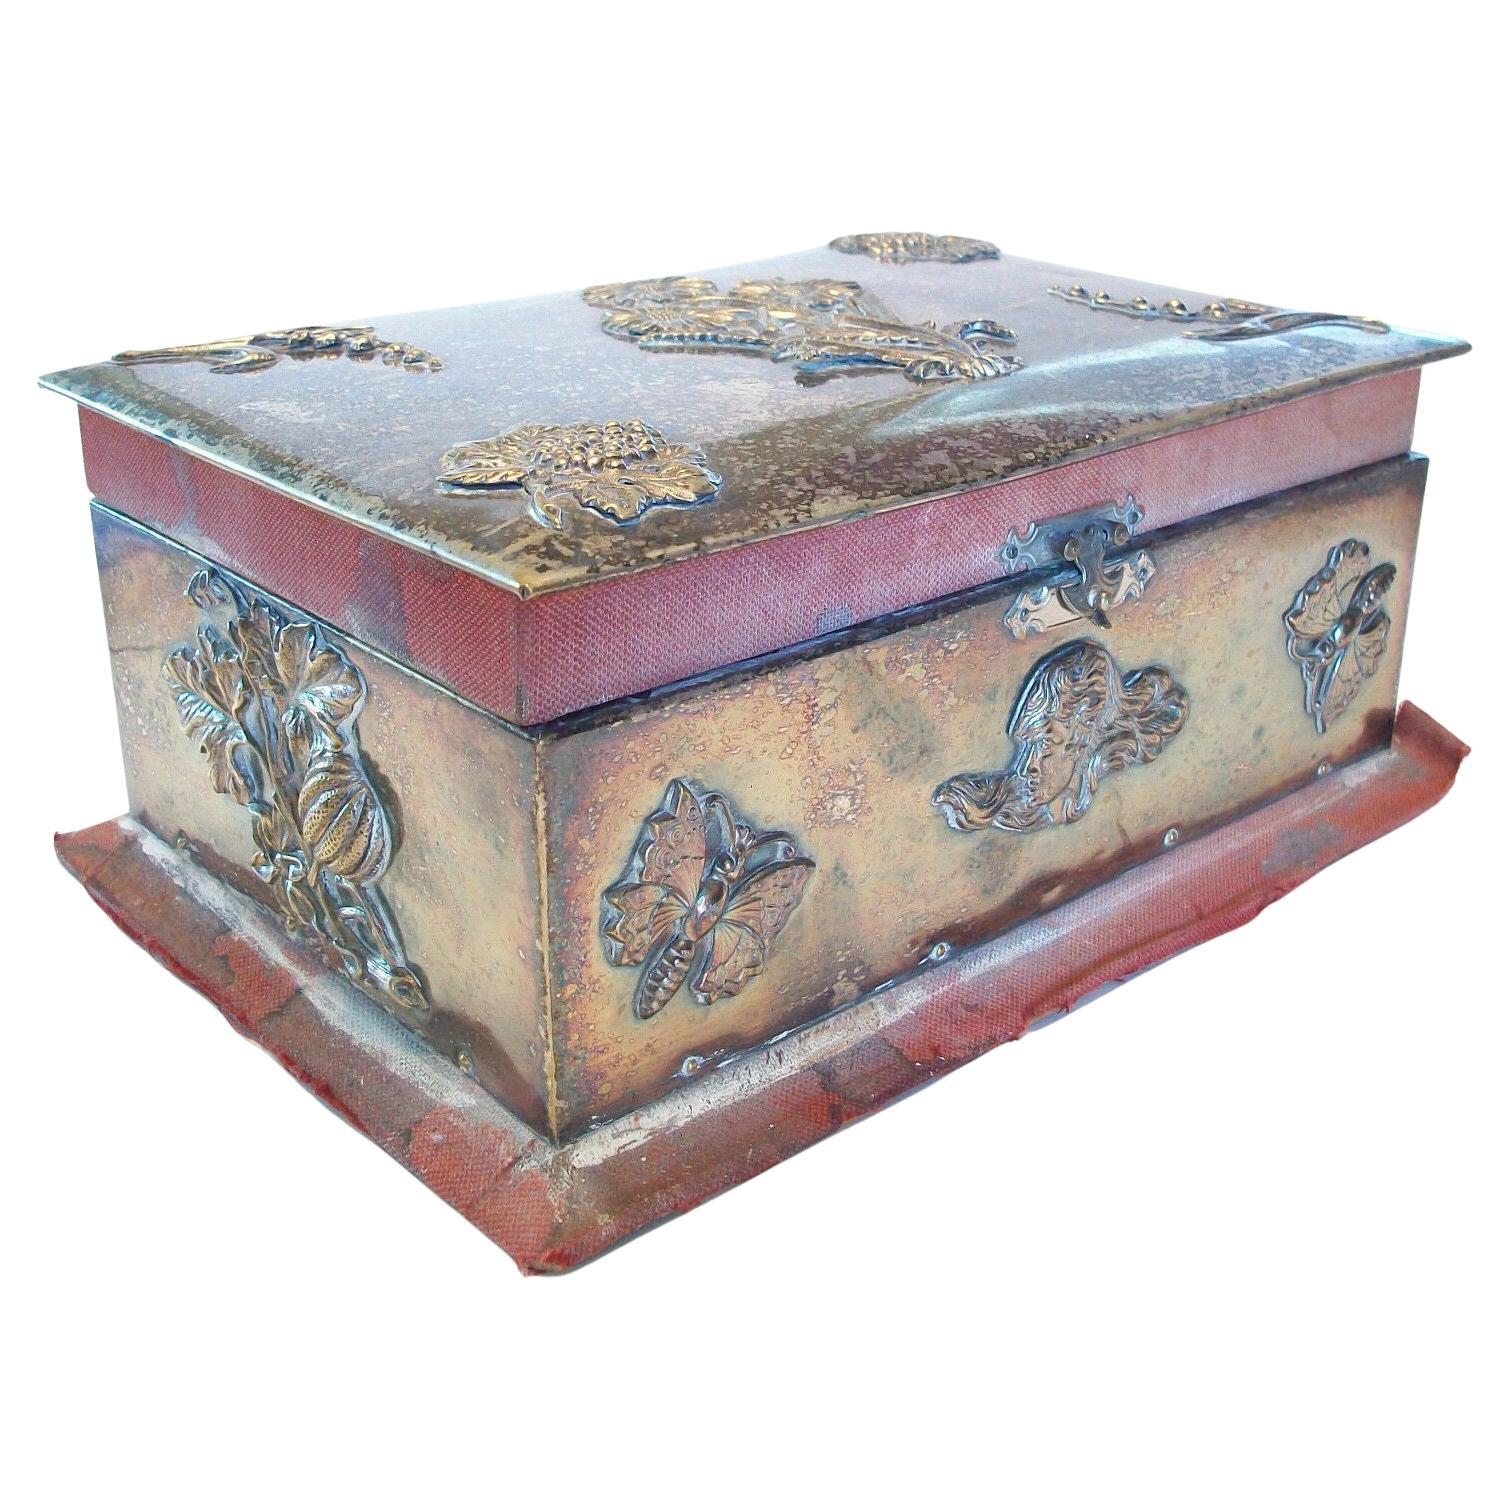 Arts & Crafts Jewelry Box with Applied Decoration - Unsigned - U K - Circa 1880